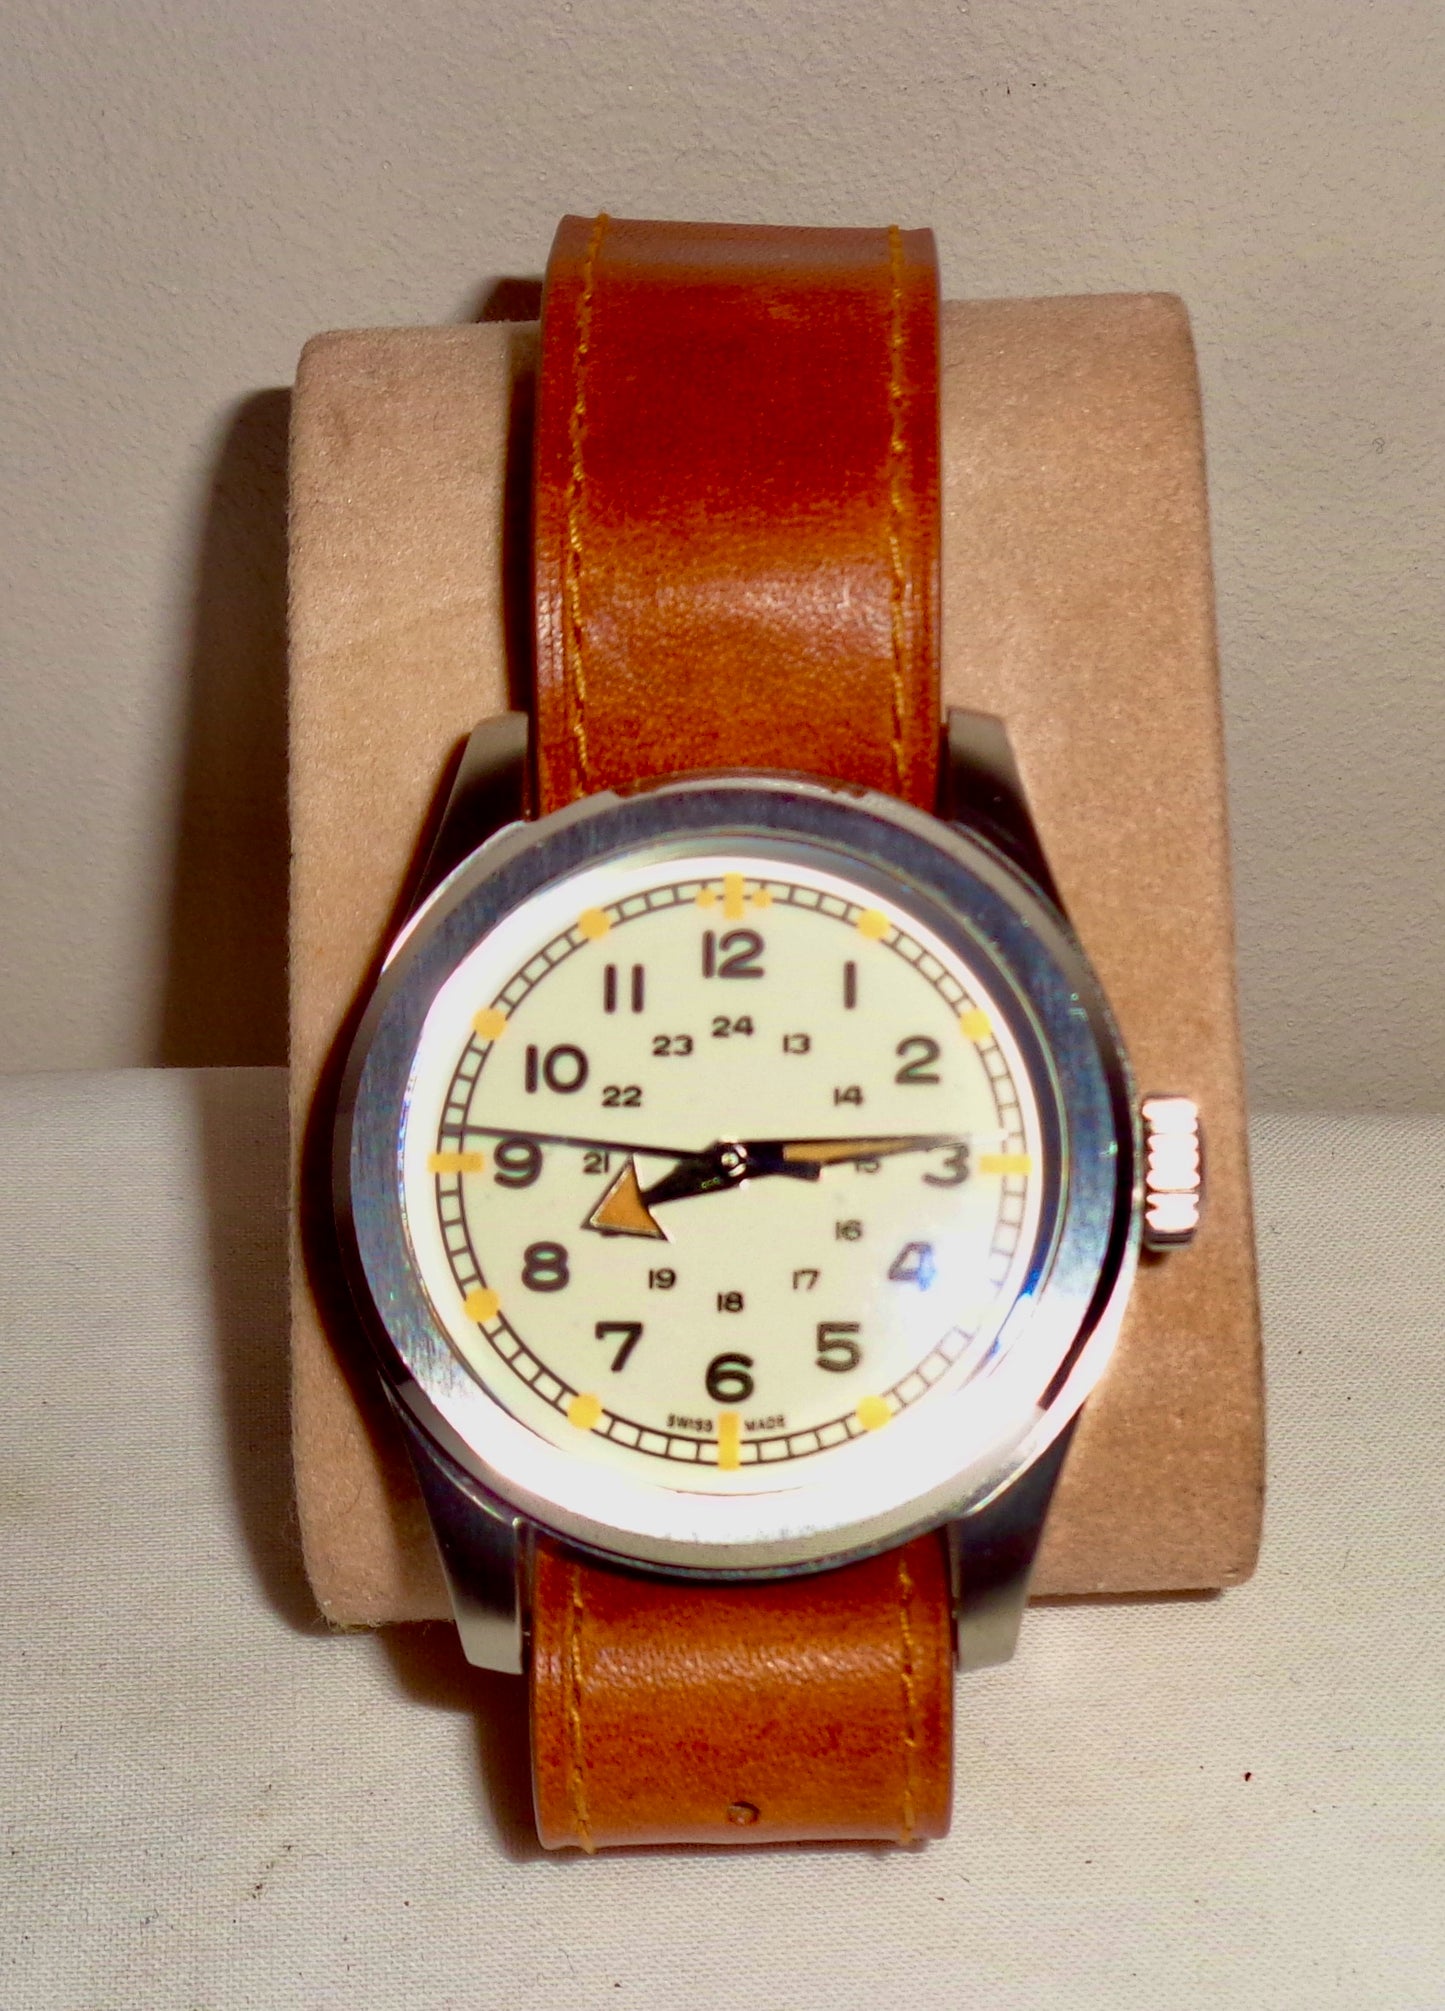 Serica WWW Wrist Watch Waterproof Modern Version Of A British Military Dirty Dozen c/w Bonklip And Two Straps